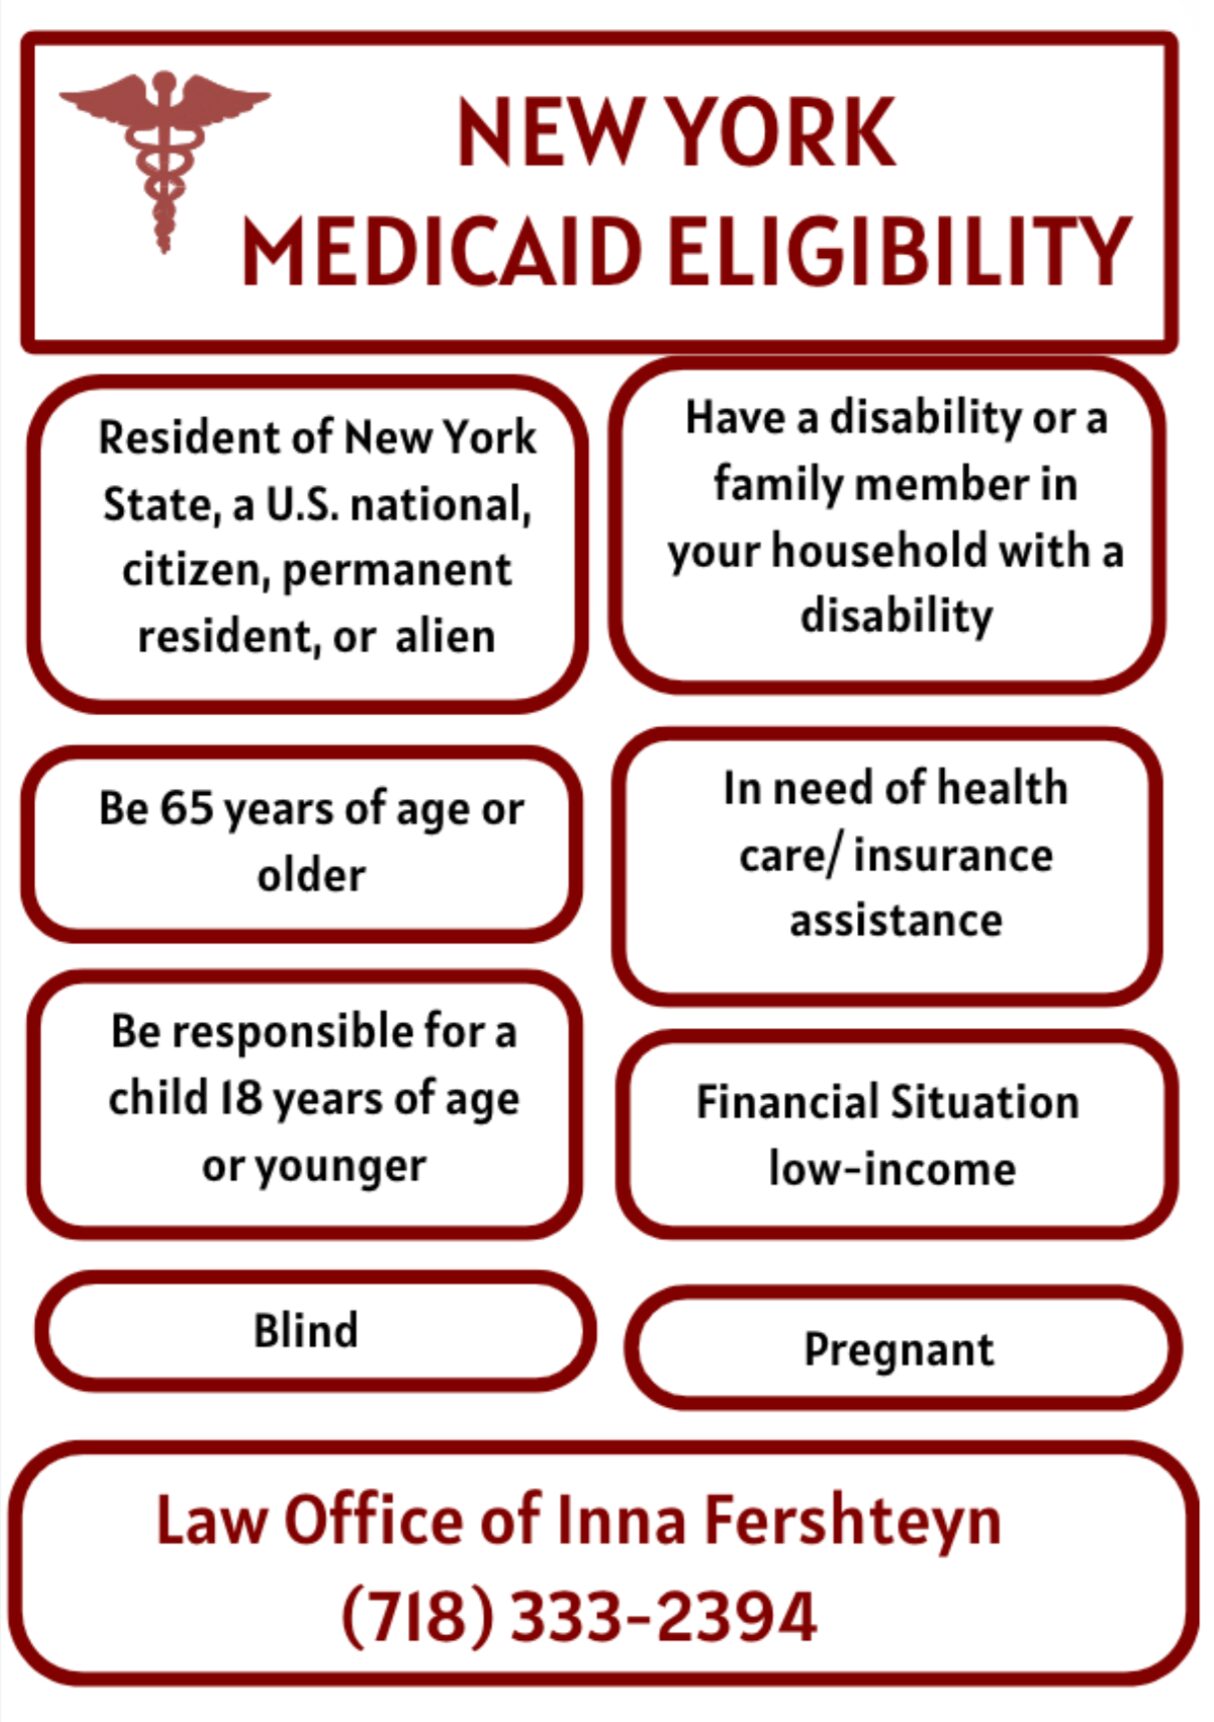 NY York Medicaid Eligibility